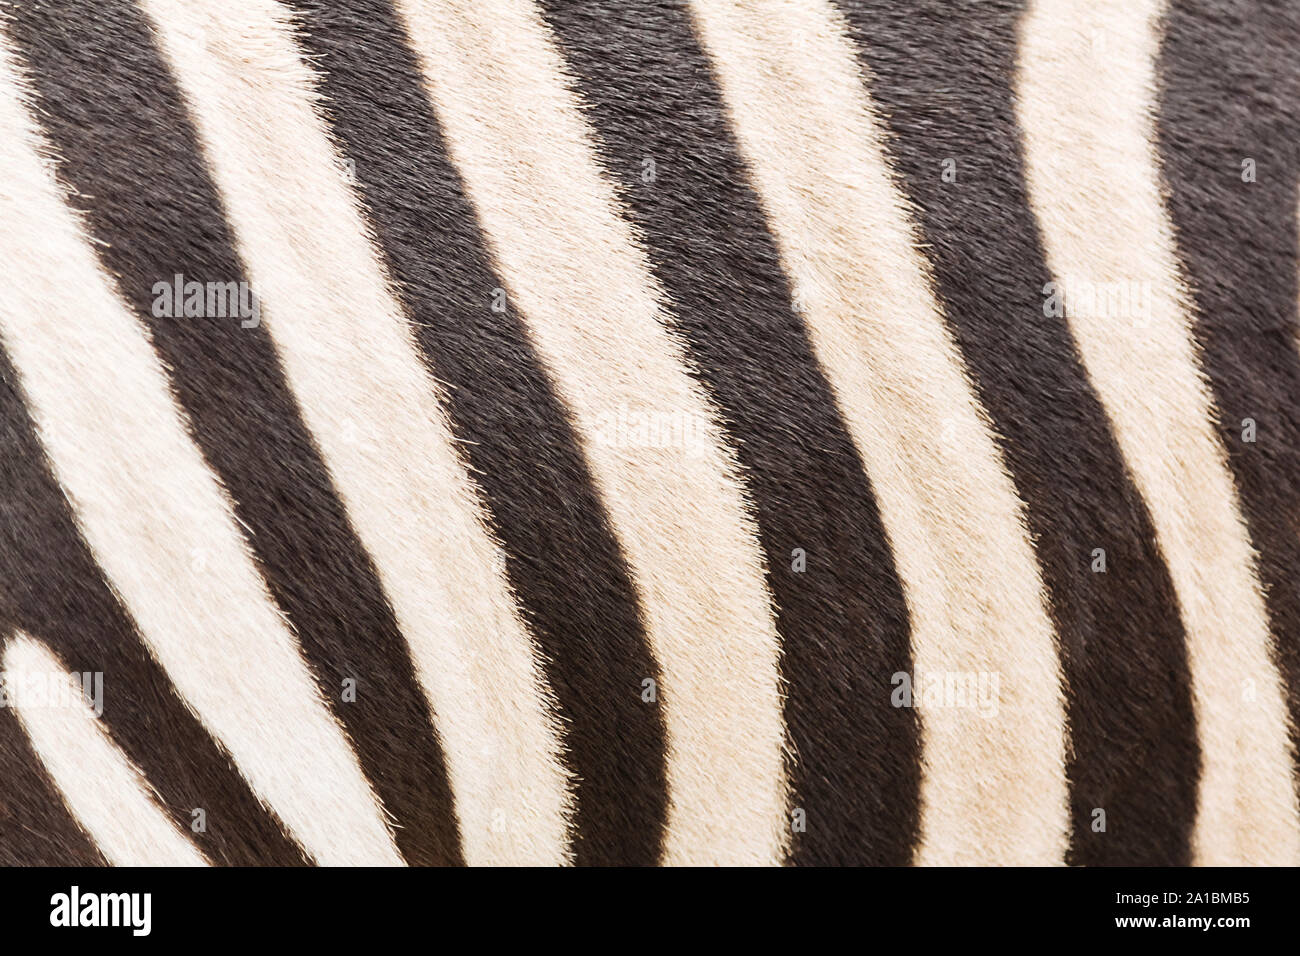 Striped zebra background Stock Photo